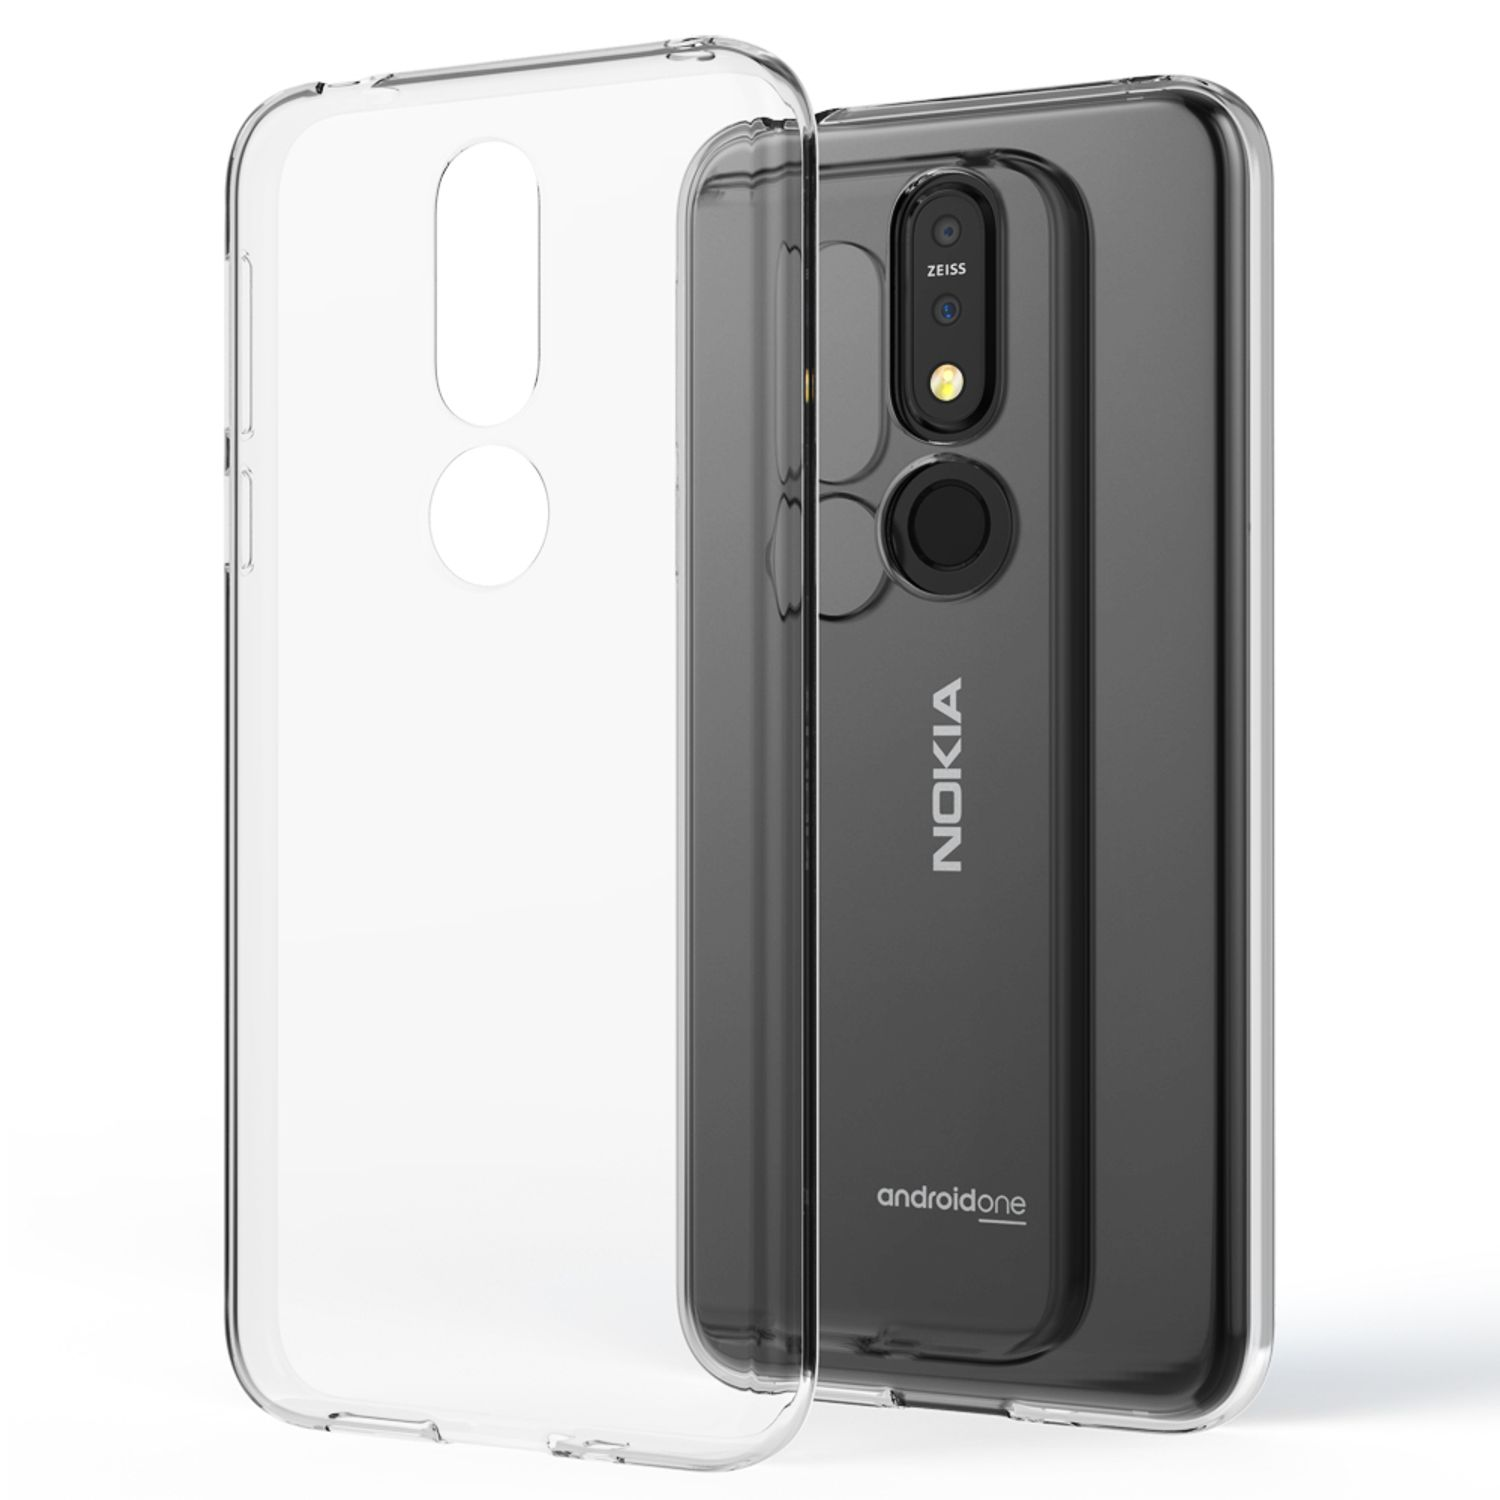 (2018), Hülle, Silikon 7.1 NALIA Transparente Backcover, Transparent Nokia, Klar